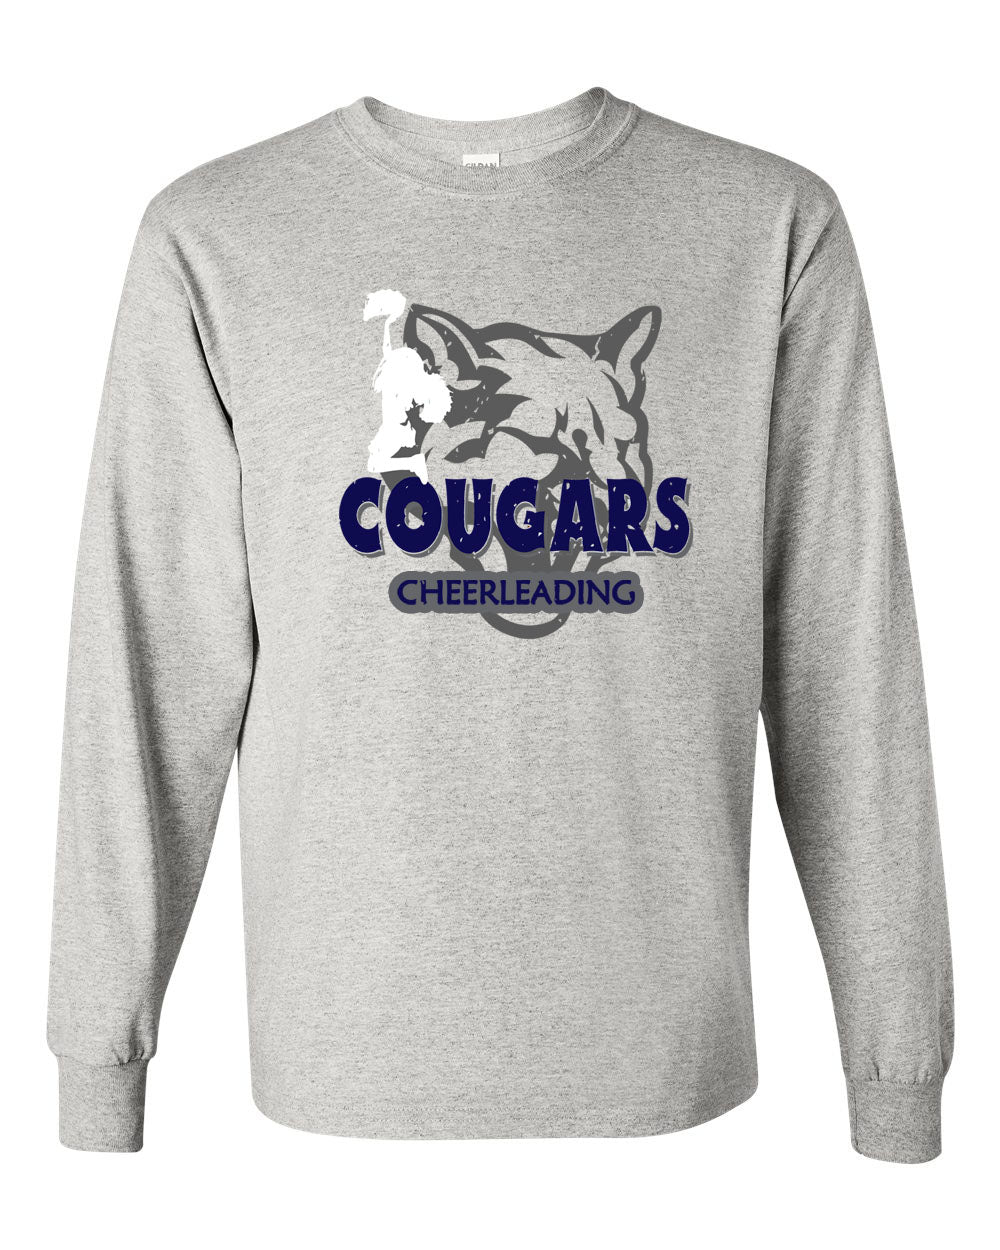 Cougars Cheerleading Long Sleeve Shirt